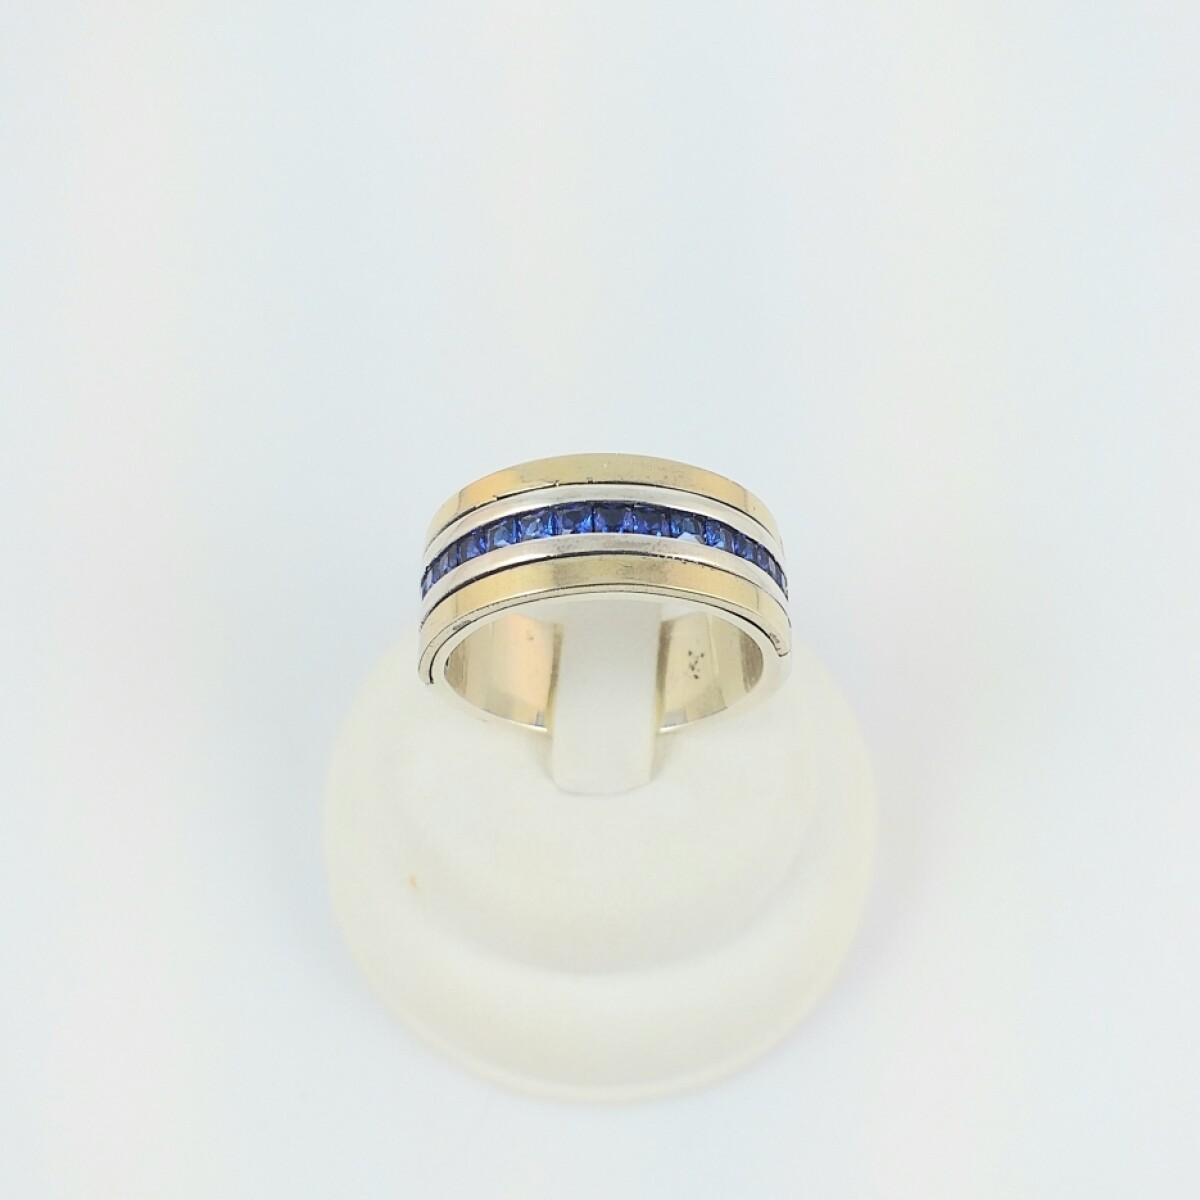 Anillo de plata 925 con circonias azules al centro y bordes en double de oro 18 ktes. Ancho 9 mm, diámetro interno 18.5 mm. 